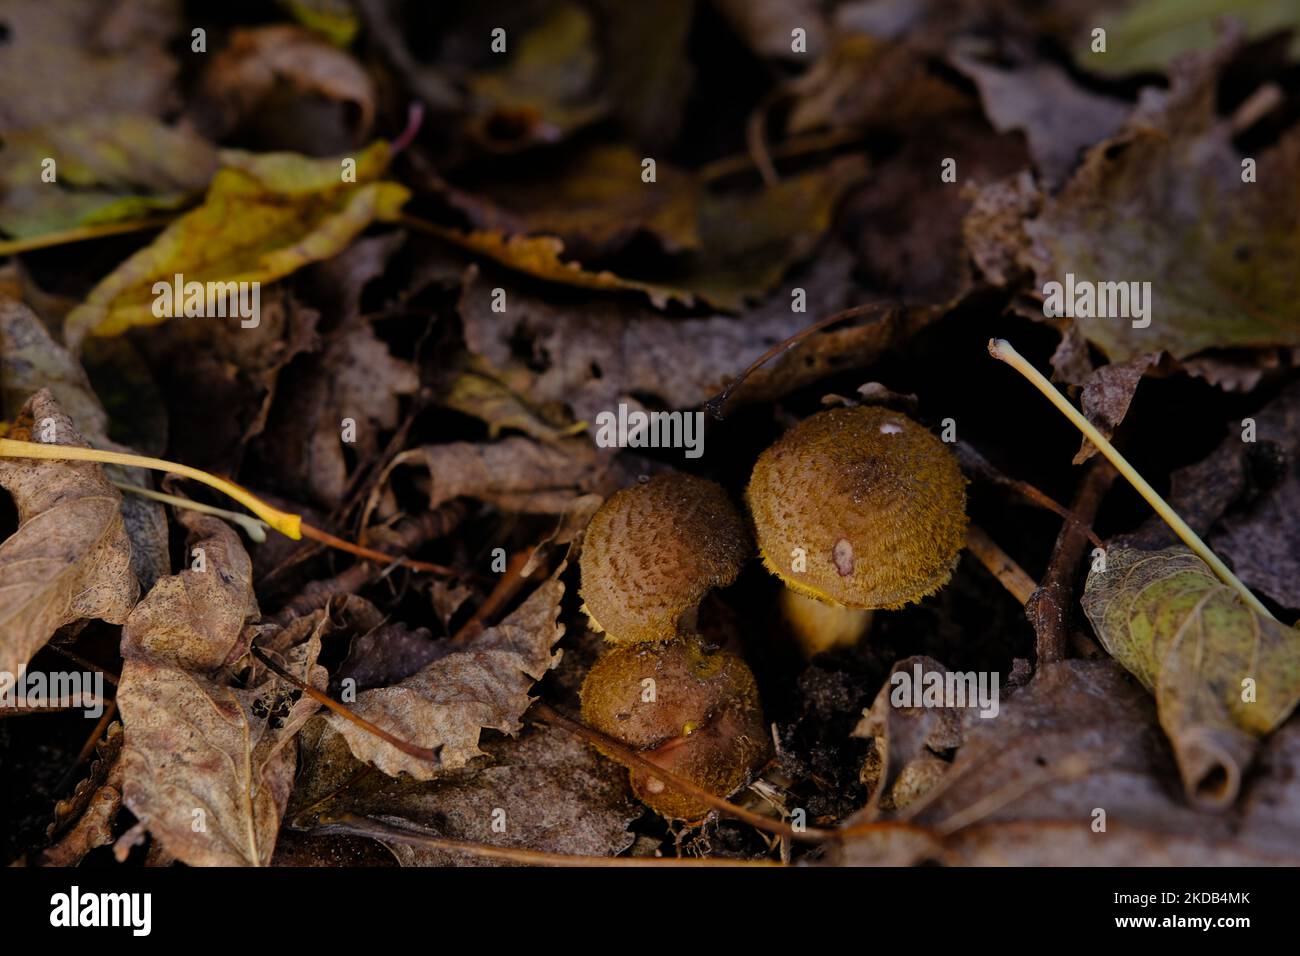 Edible forest mushroom Armillaria mellea commonly known as honey fungus. Mushroom picking. A basidiomycete fungus in the genus Armillaria sinapina clo Stock Photo